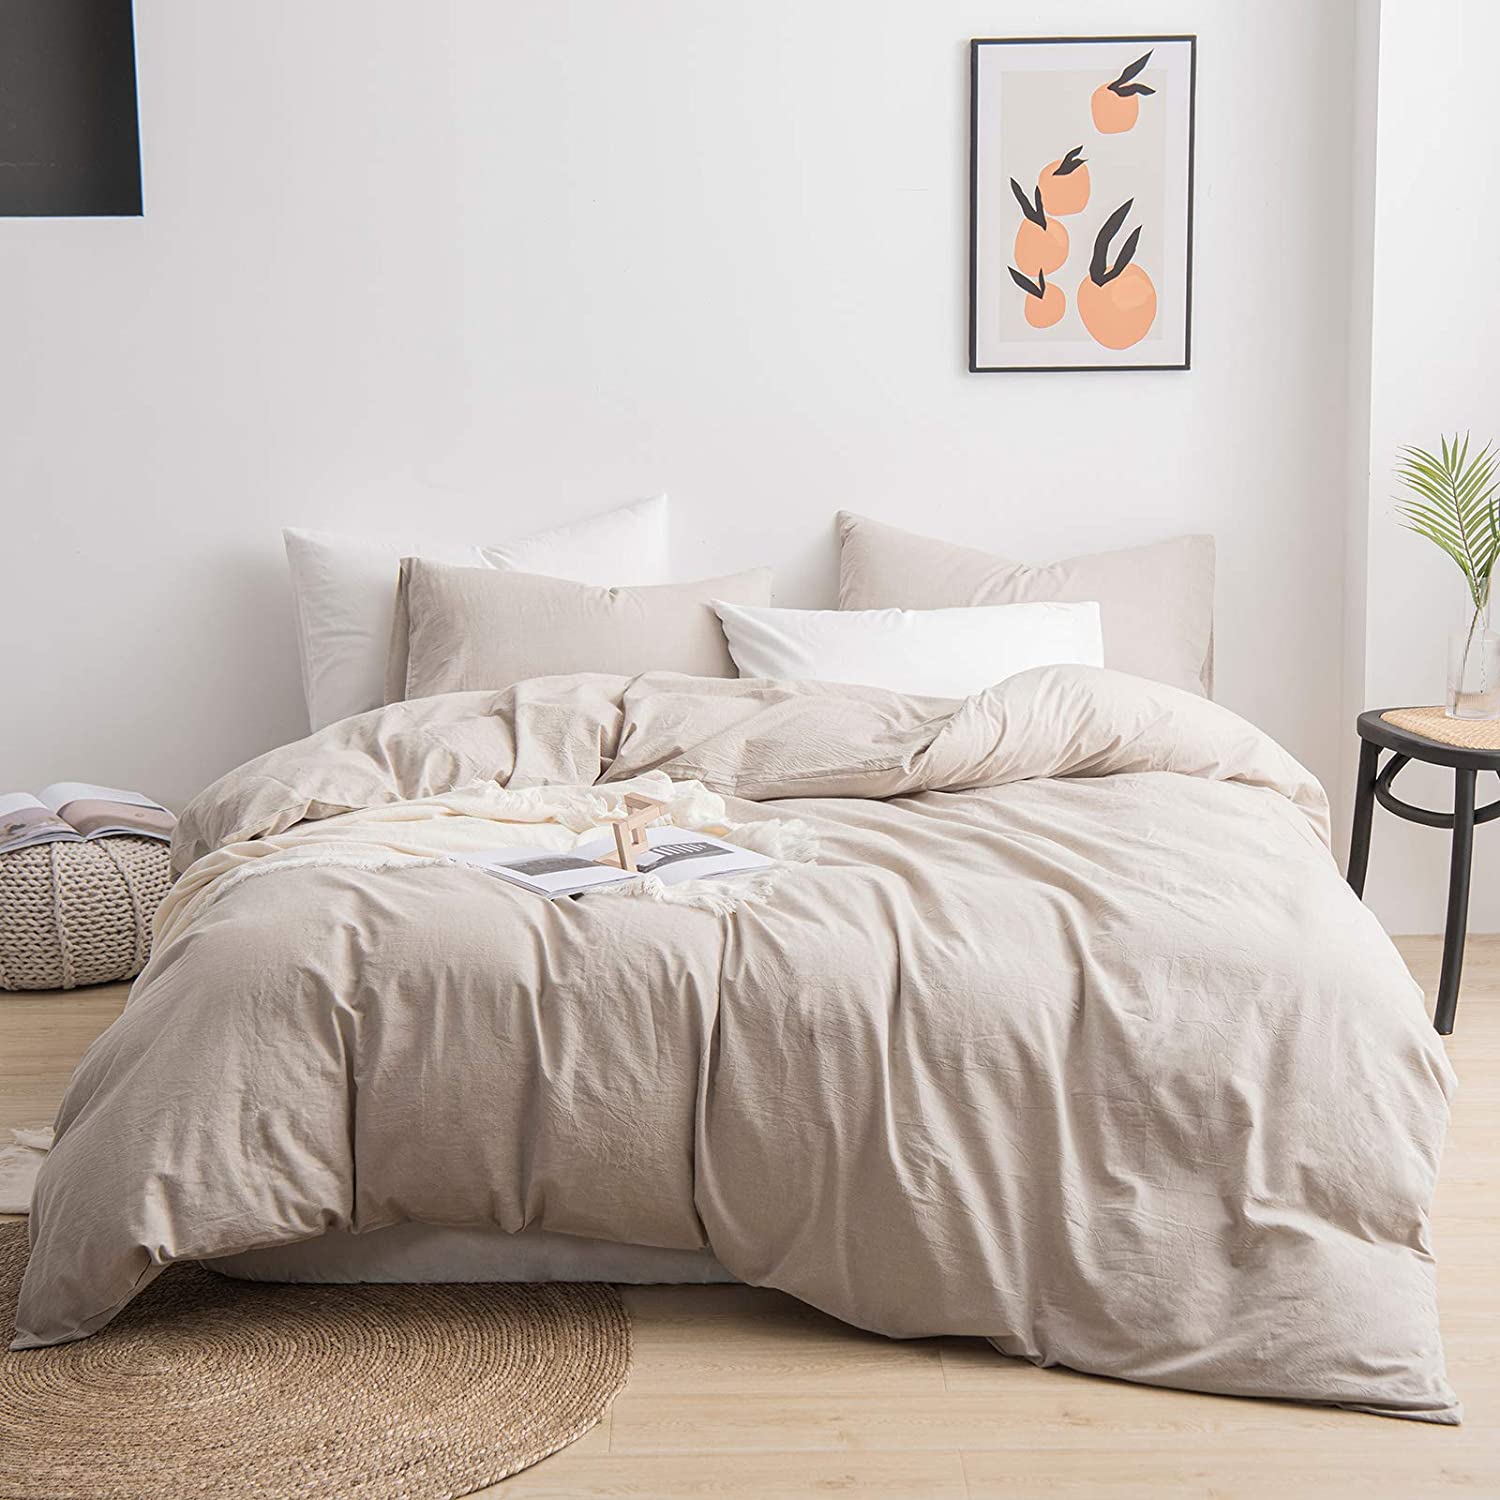 Natural bed linen